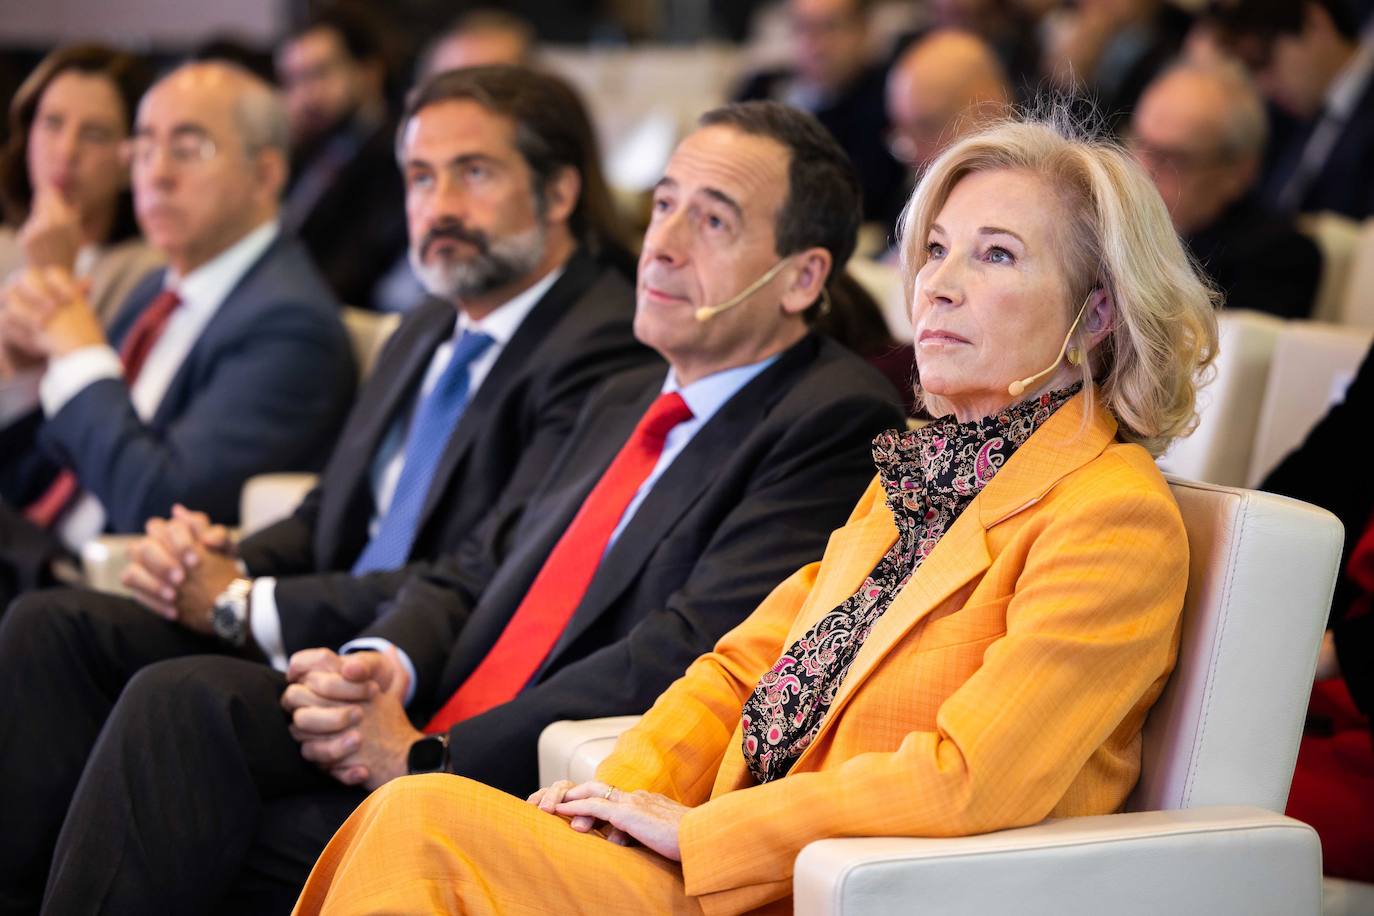 María Dolores Dancausa, consejera delegada de Bankinter, junto a Gonzalo Gortázar, consejero delegado de CaixaBank. /kpmg